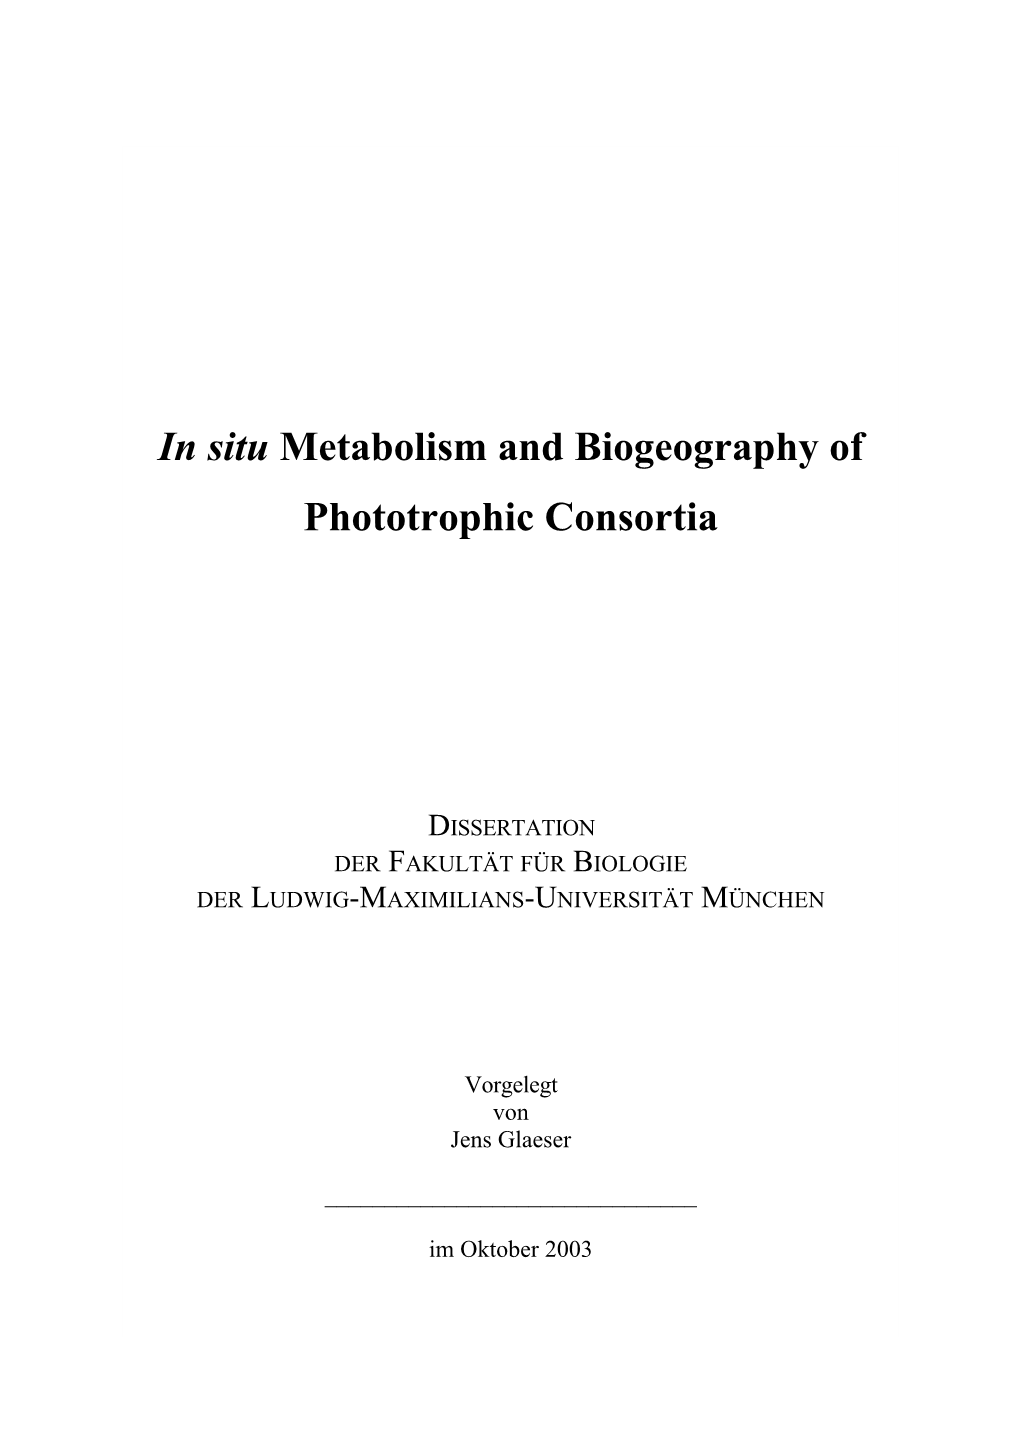 In Situ Metabolism and Biogeography of Phototrophic Consortia